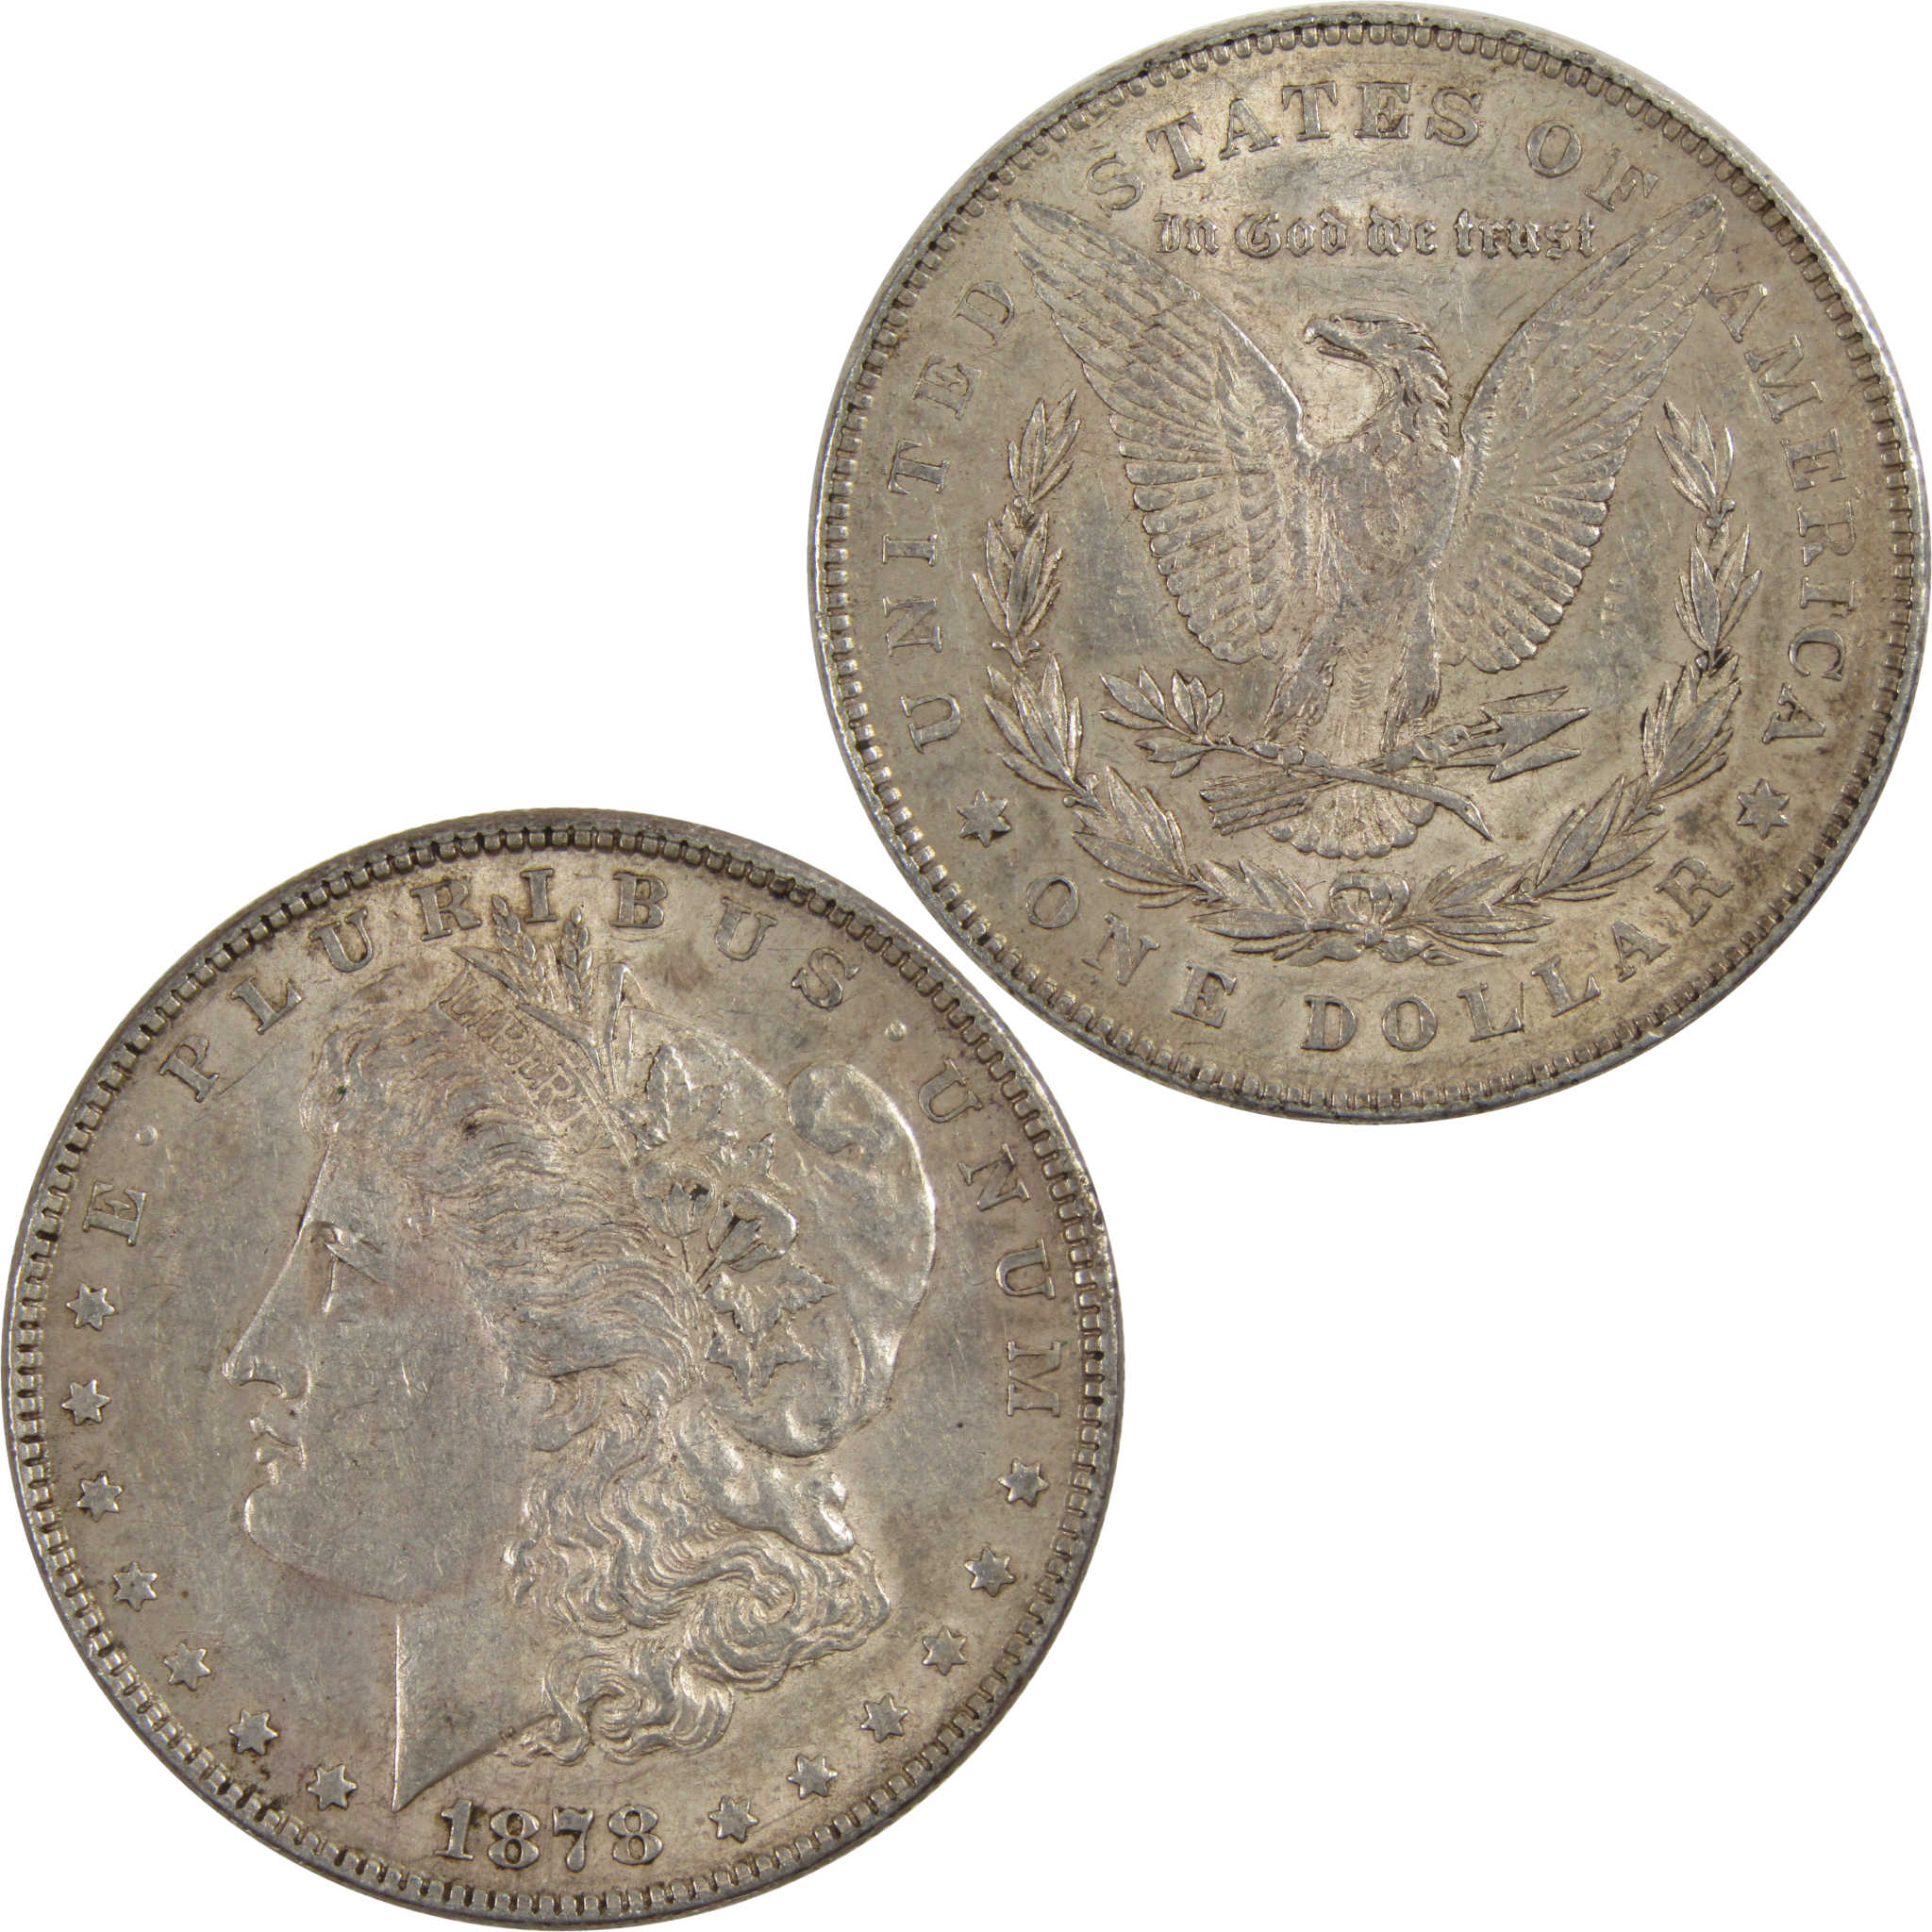 1878 7TF Rev 78 Morgan Dollar AU About Uncirculated 90% Silver $1 Coin SKU:I8139 - Morgan coin - Morgan silver dollar - Morgan silver dollar for sale - Profile Coins &amp; Collectibles